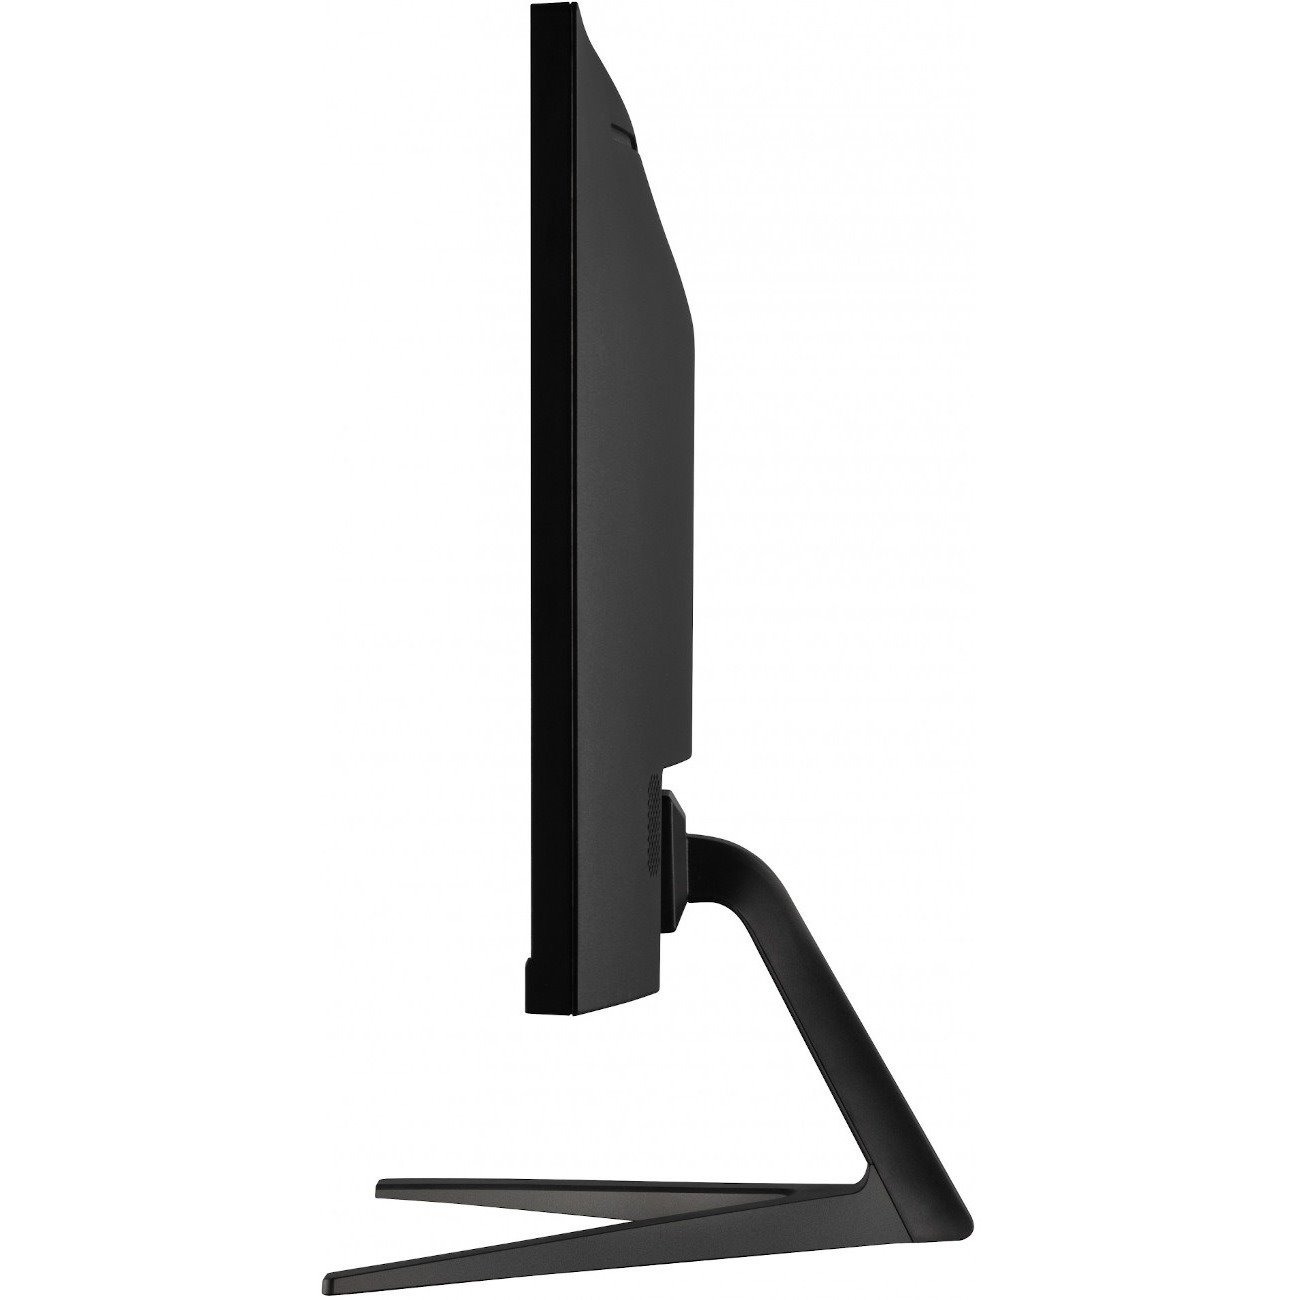 ViewSonic VX2418-P-MHD 60.5 cm (23.8") Full HD LED Gaming LCD Monitor - 16:9 - Black